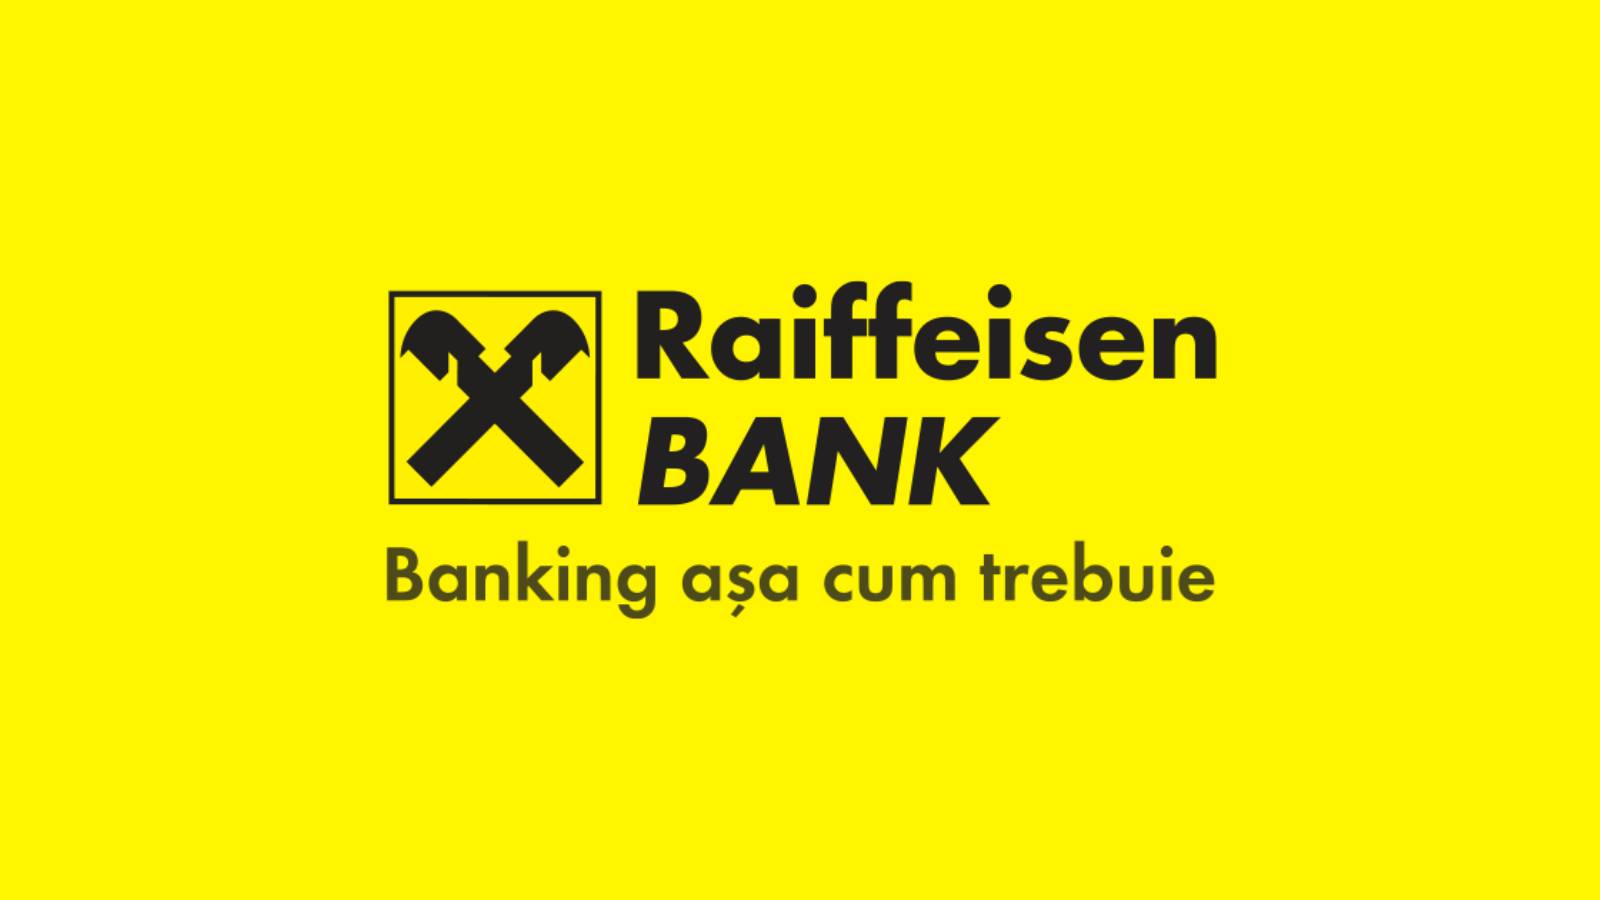 Raiffeisen Bank LAST MINUTE Announcement Important Change Customers